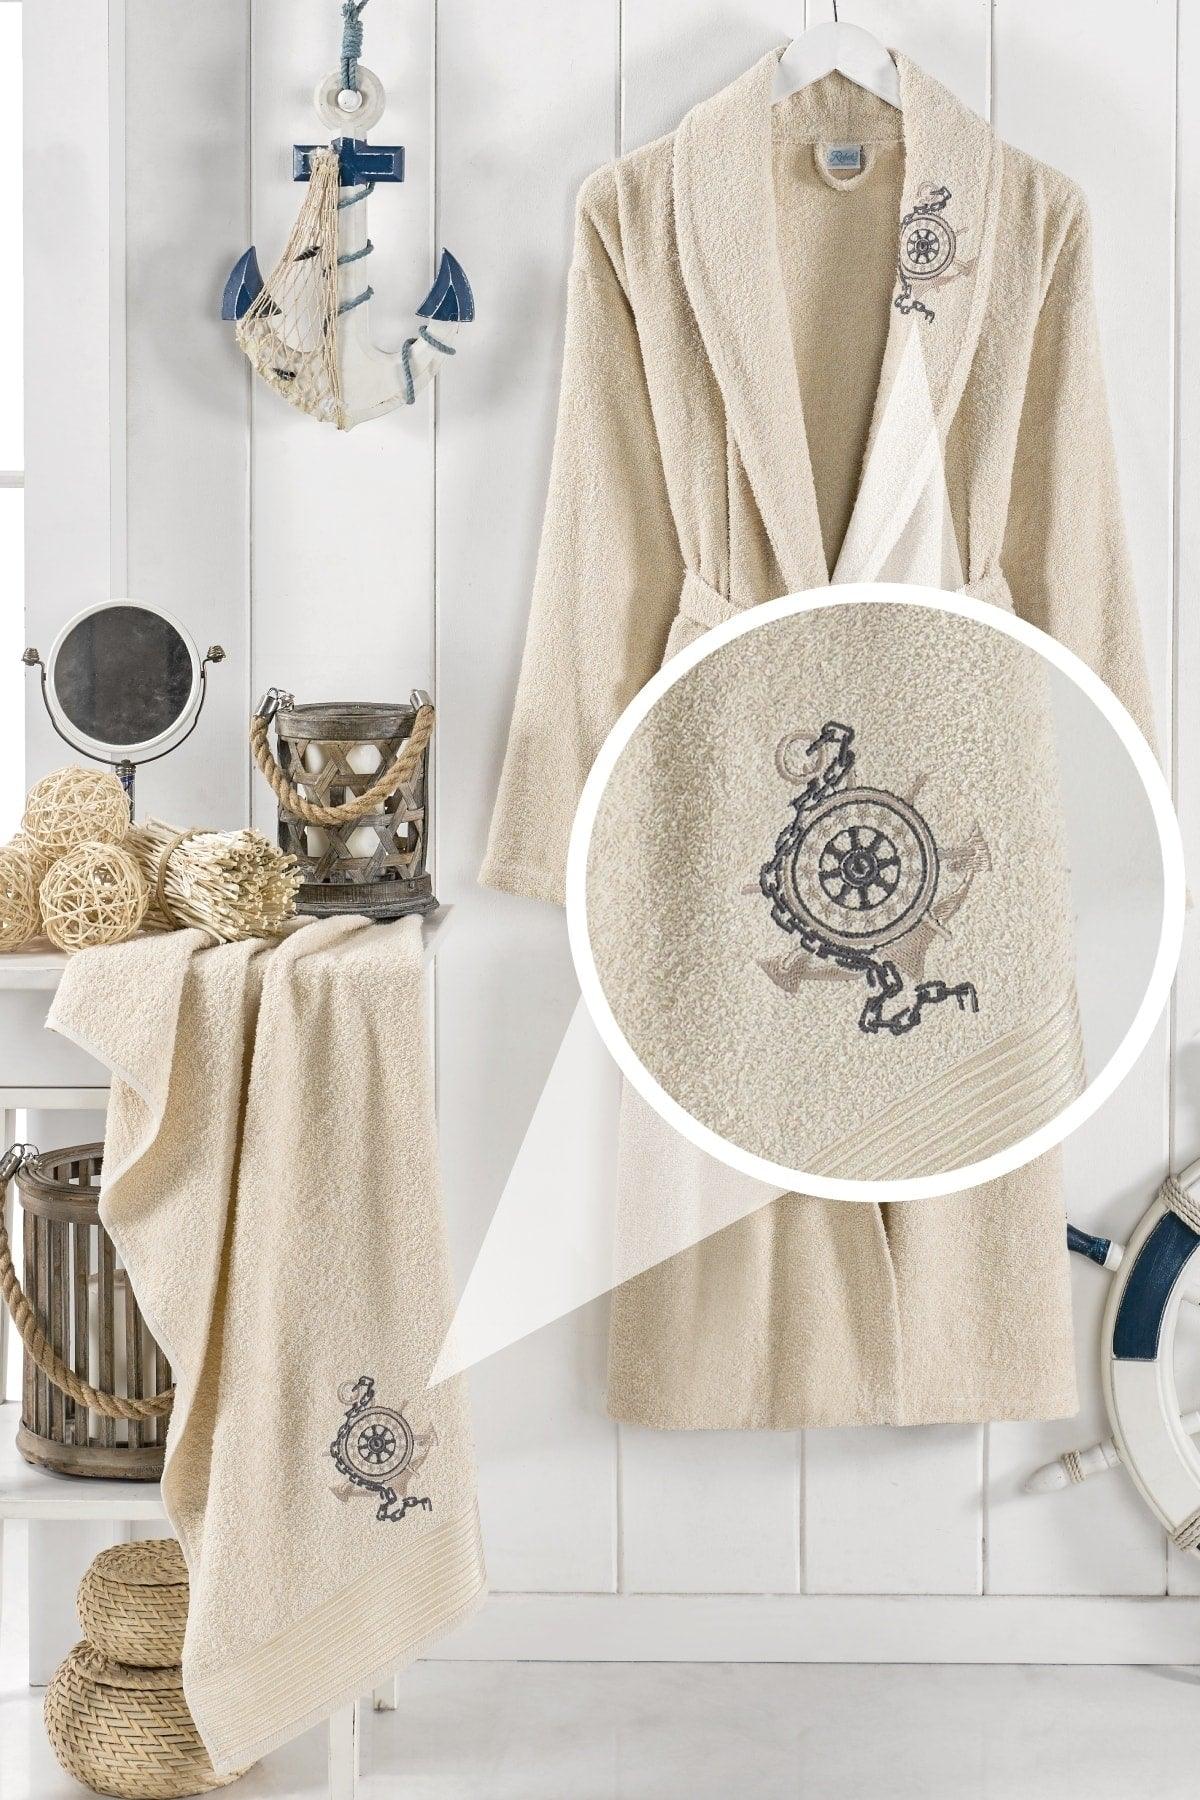 Elmira Şalyaka Women Men Cotton Towel Bath Robe Set - Swordslife